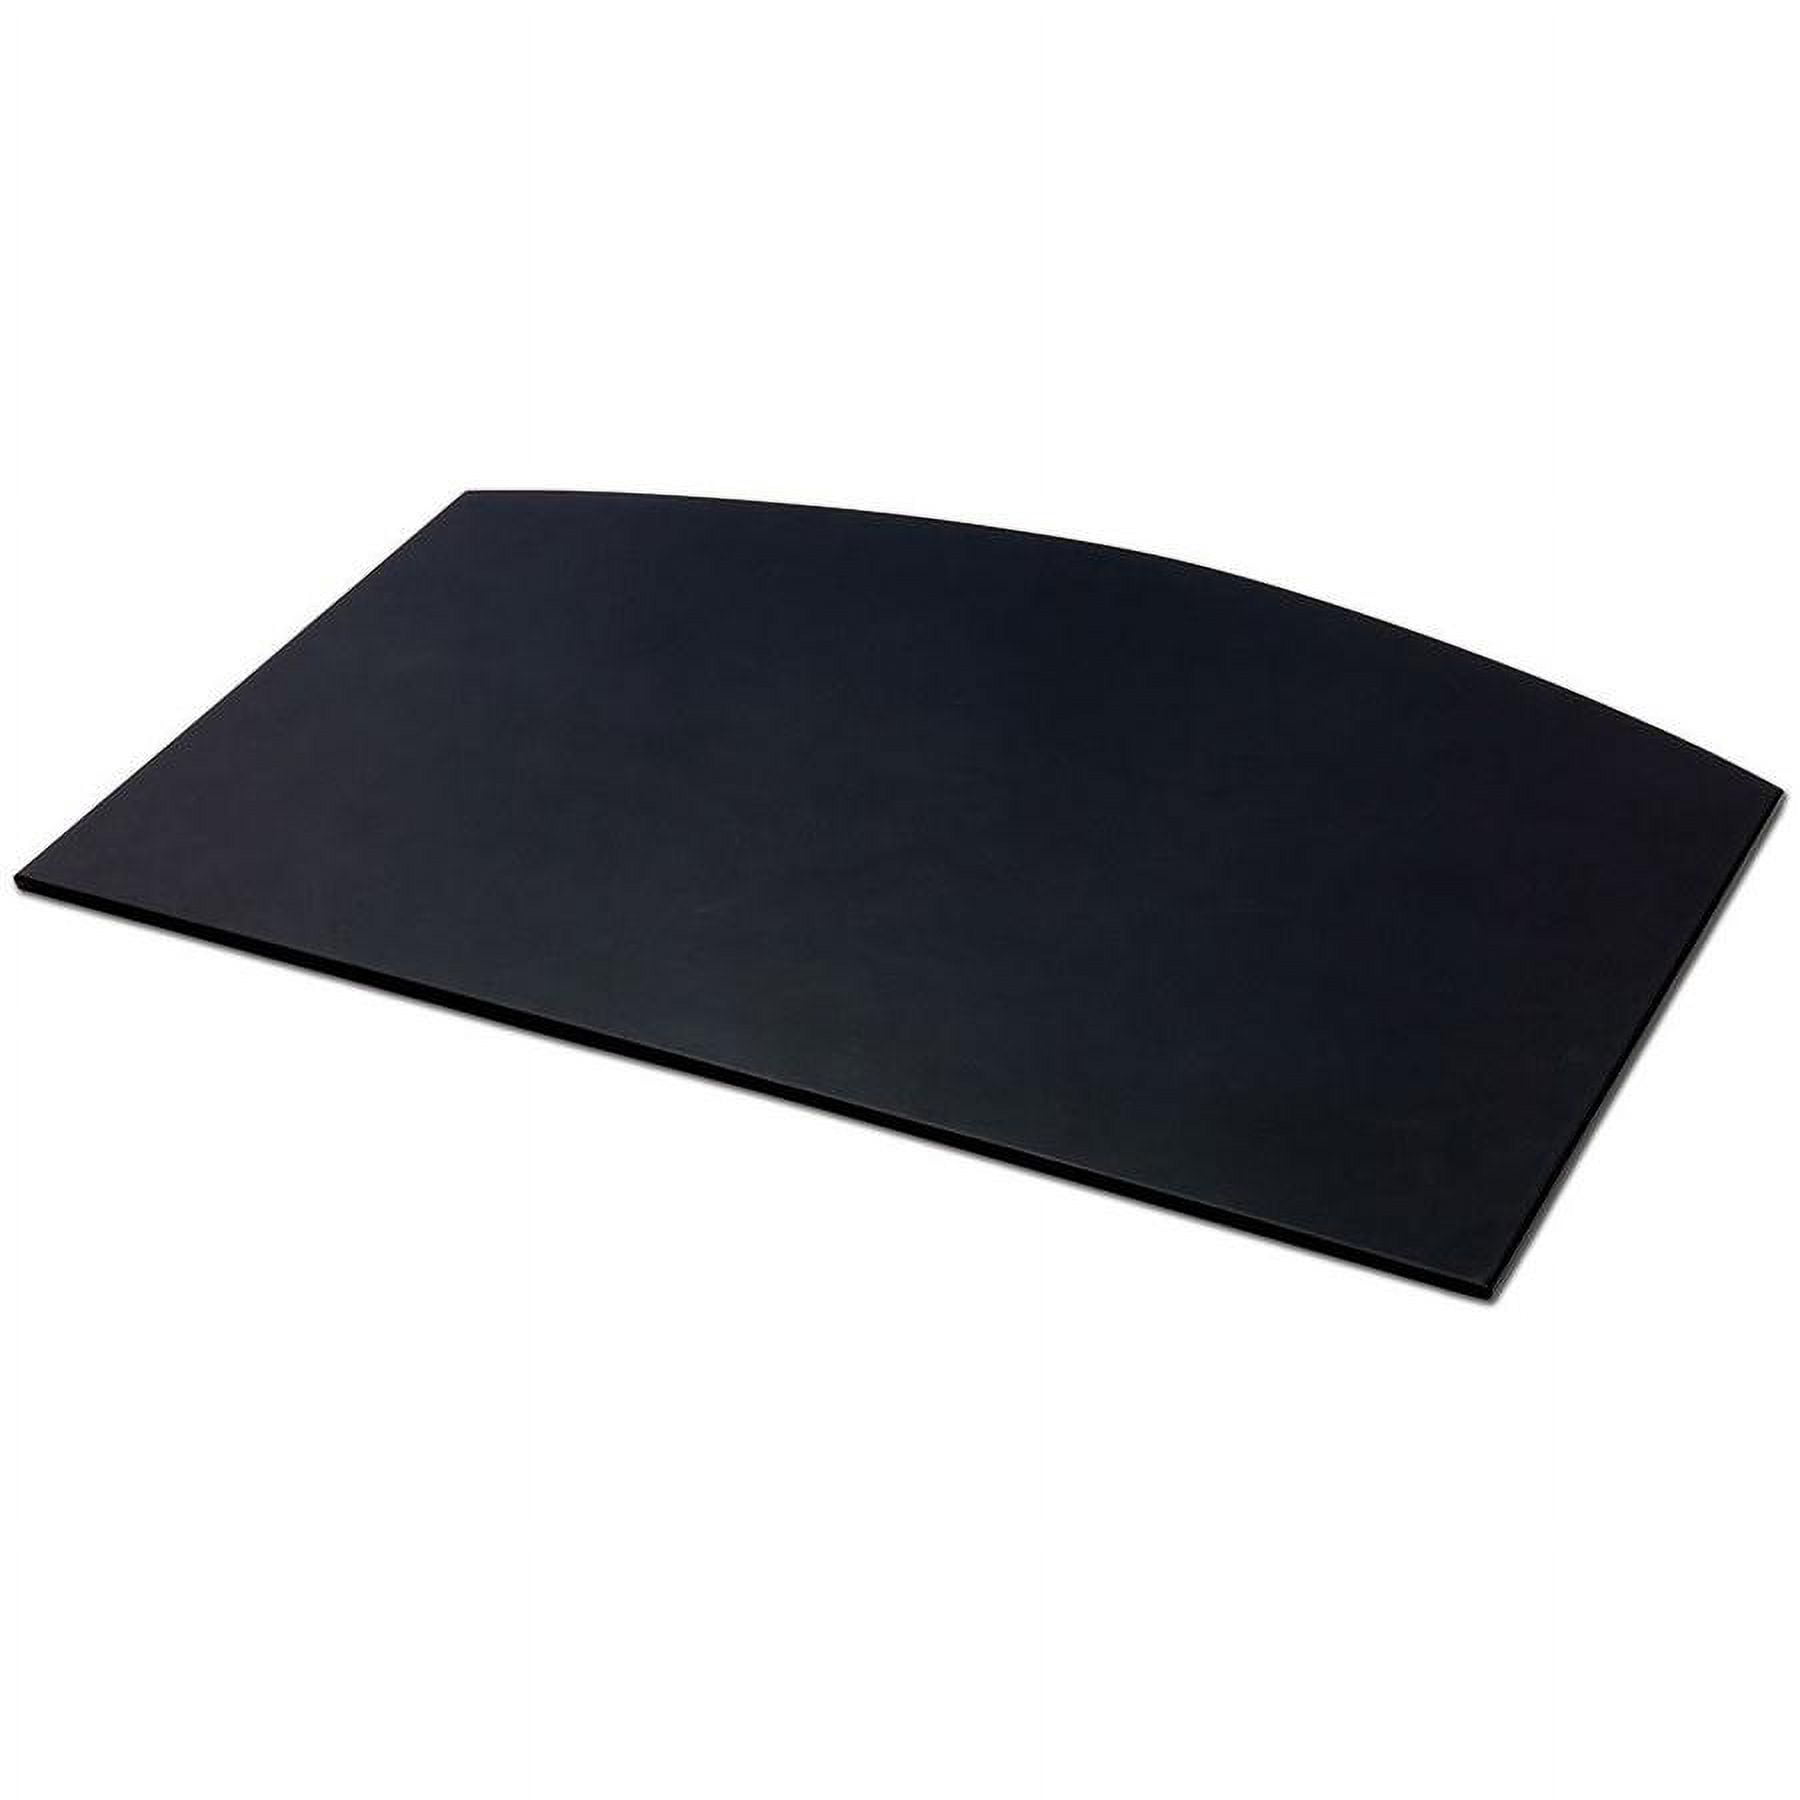 Vari 34 x 22 Standing Desk Mat Cushioned Ergonomic Anti Fatigue Floor Mat, Black, Size: 0.625(H) x 34(W) x 22(D) 401925